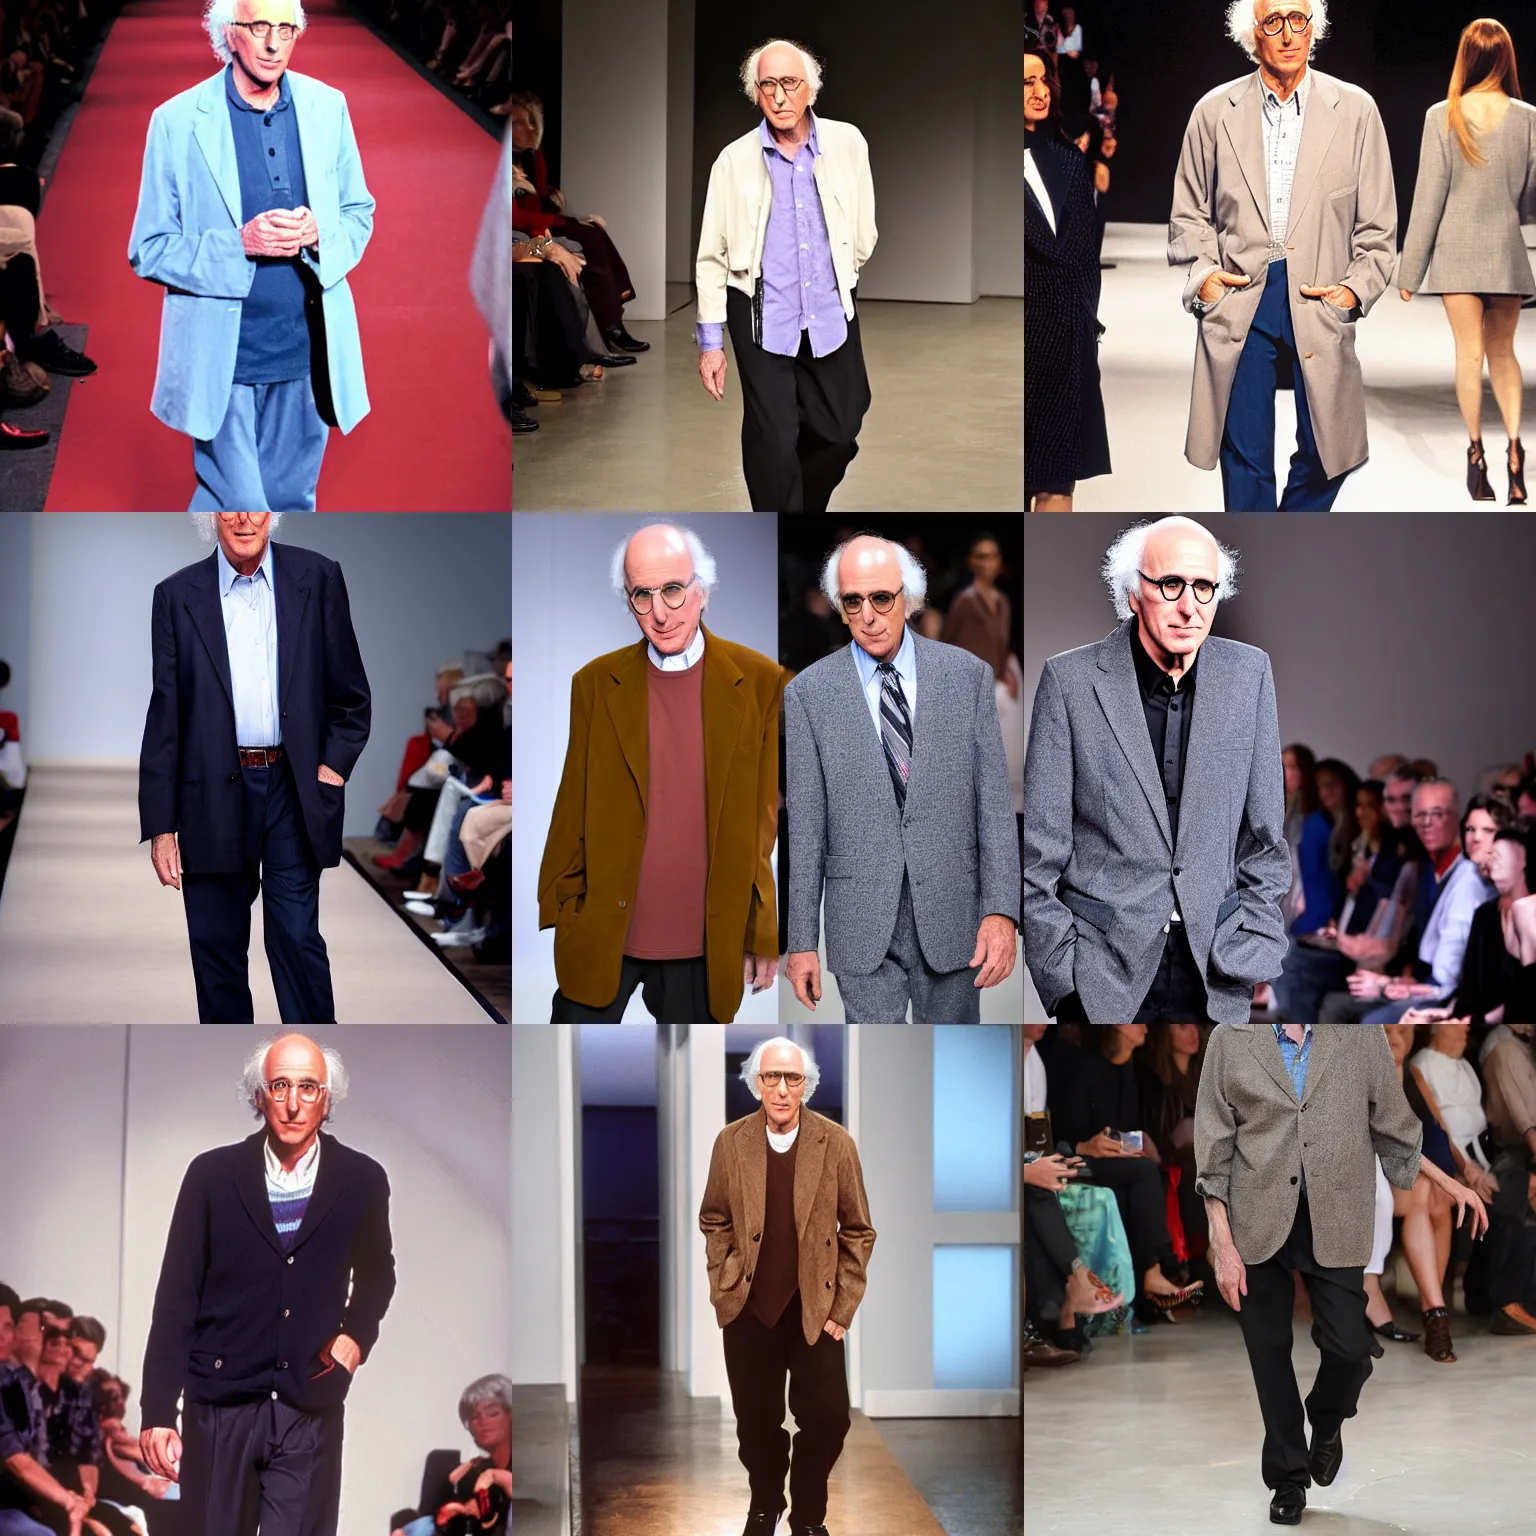 Prompt: Larry David modeling high fashion on a catwalk